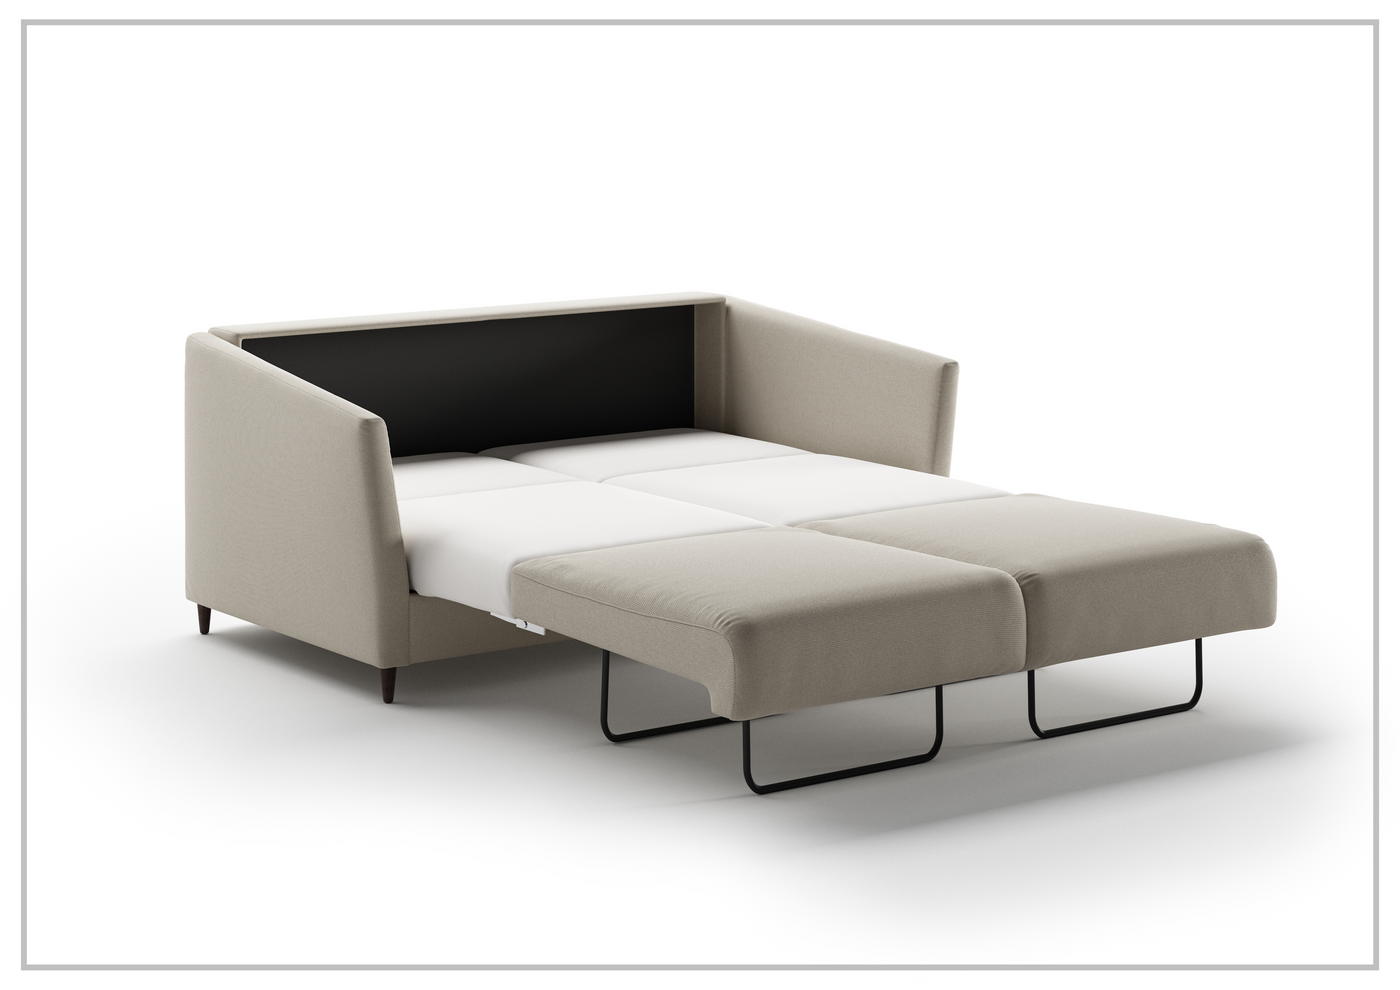 Luonto Erika Fabric Dual motion Sofa Sleeper with Foam Mattress